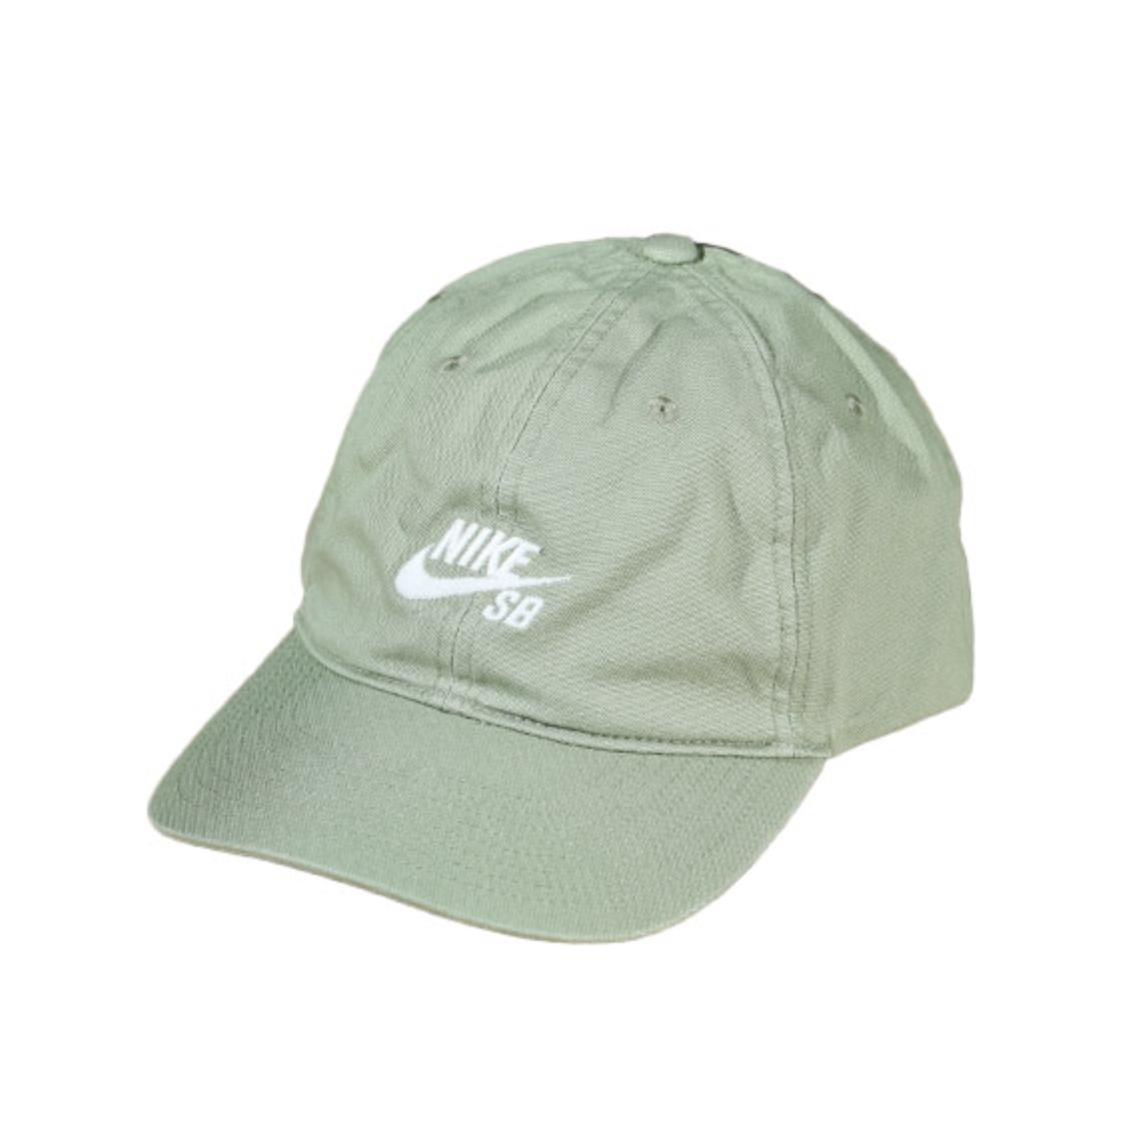 Nike SB Club Cap - Oil Green/ White